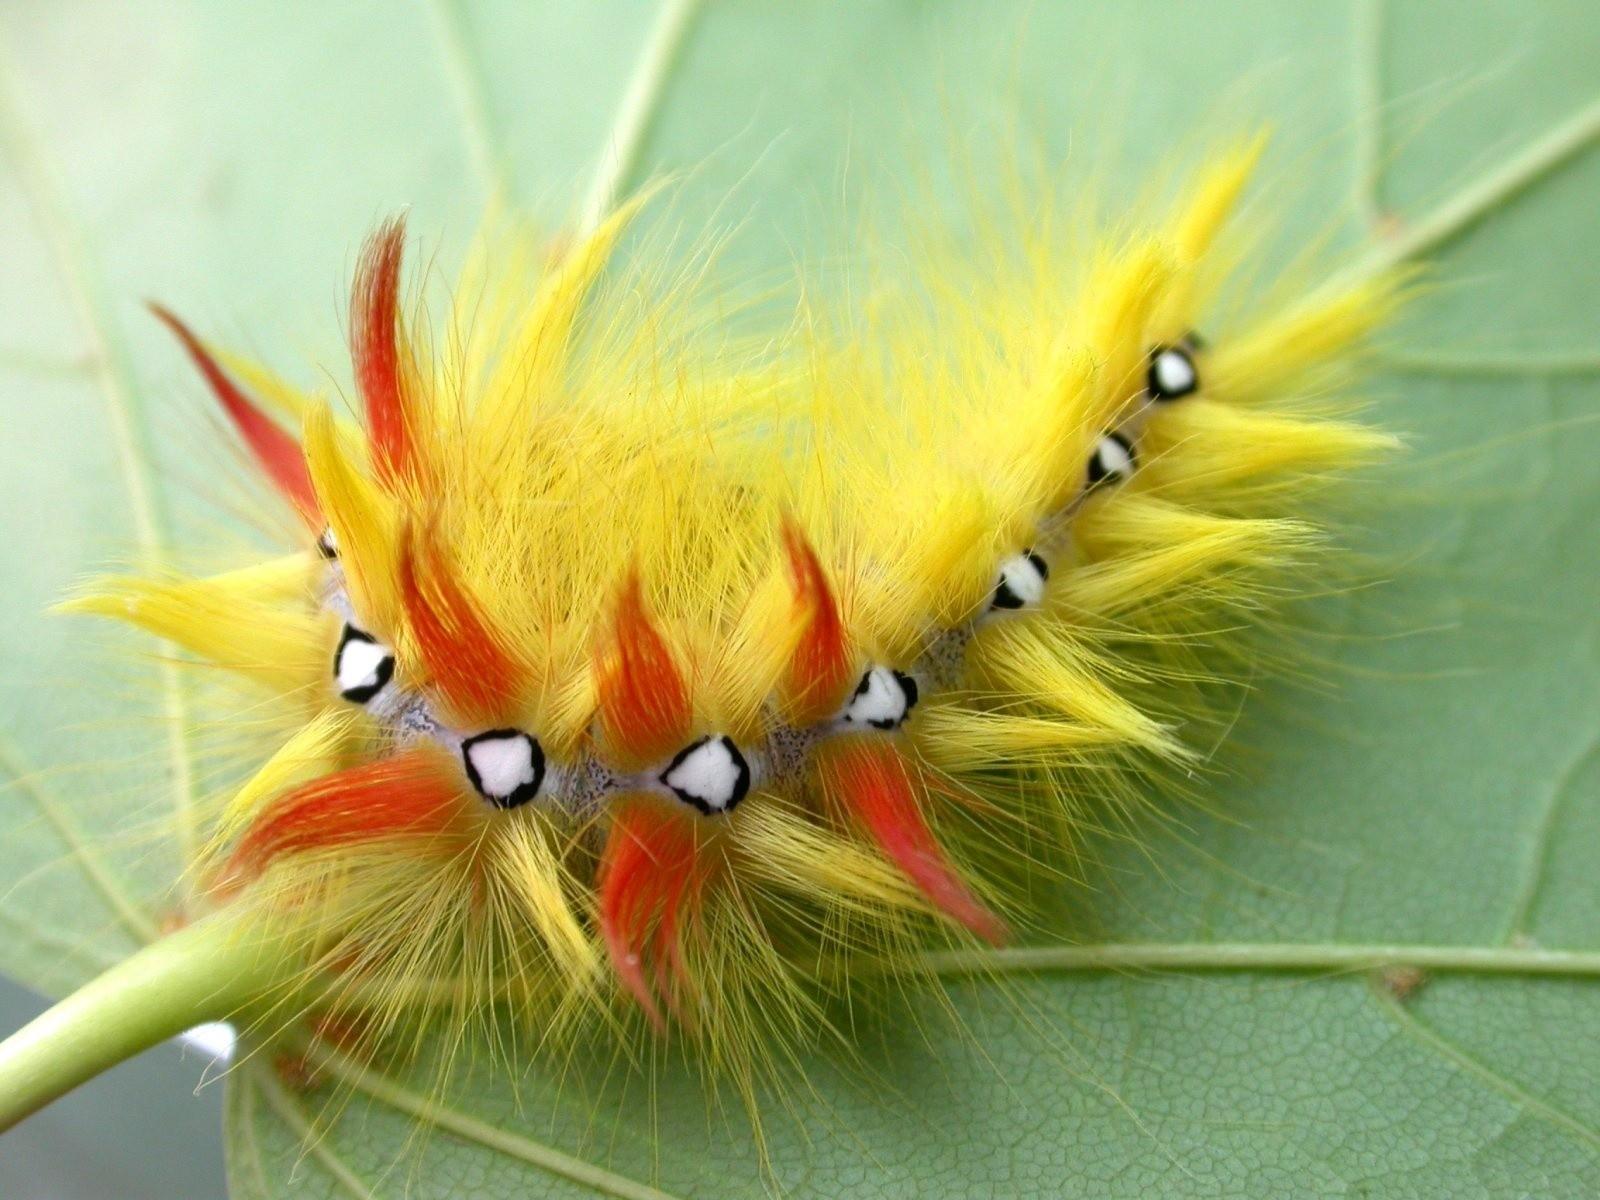 Caterpillars wallpaper picture download